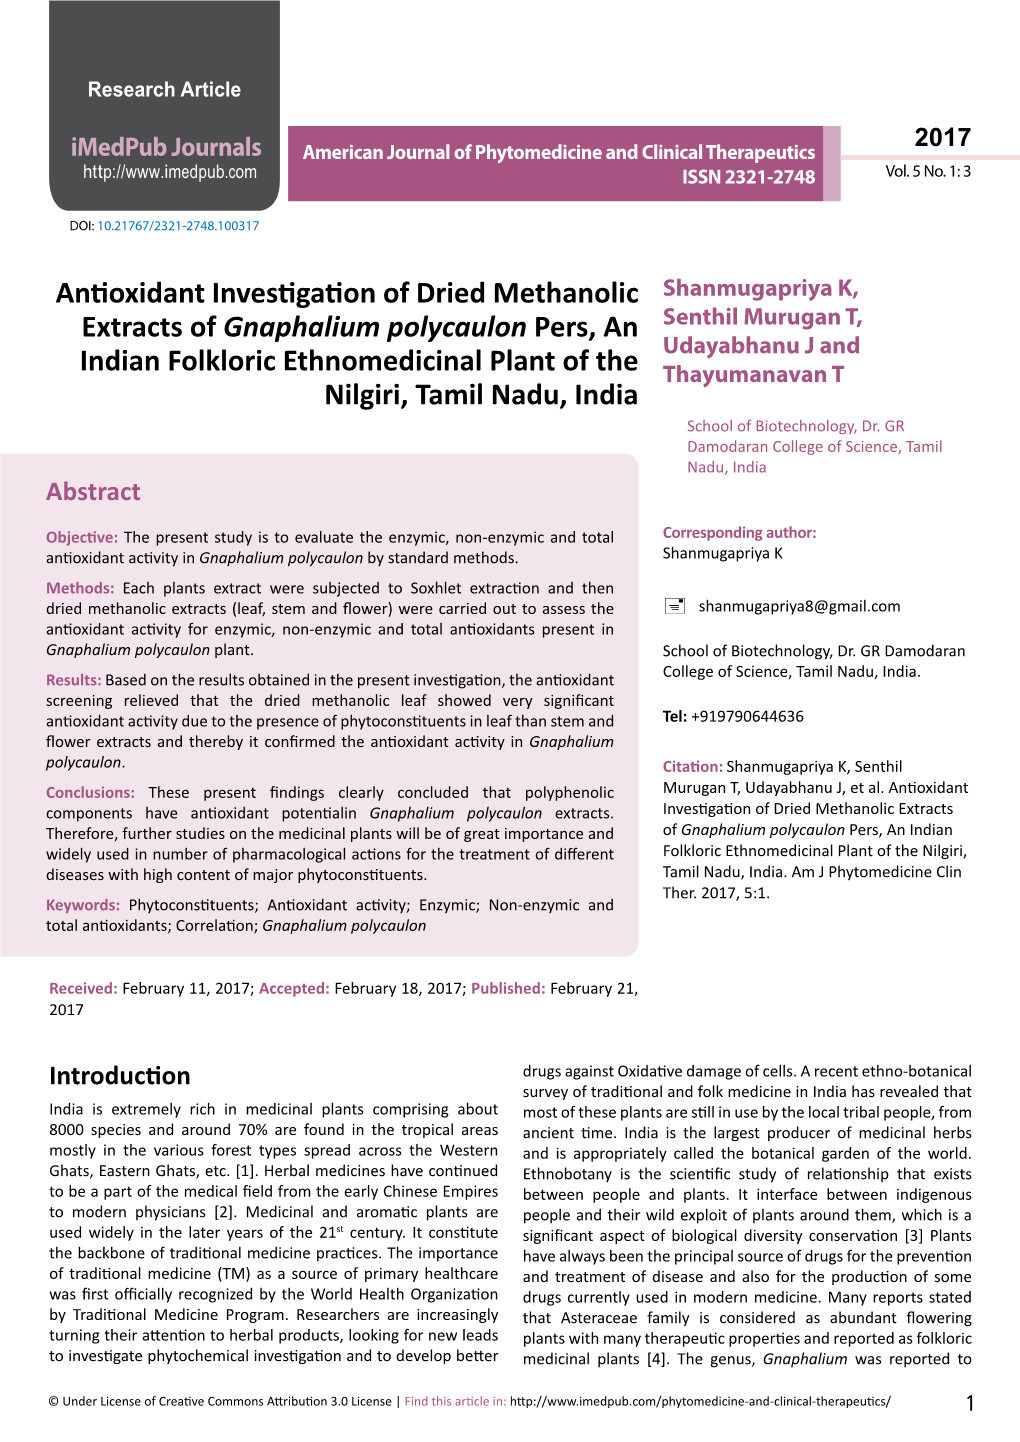 Antioxidant Investigation of Dried Methanolic Extracts of Gnaphalium